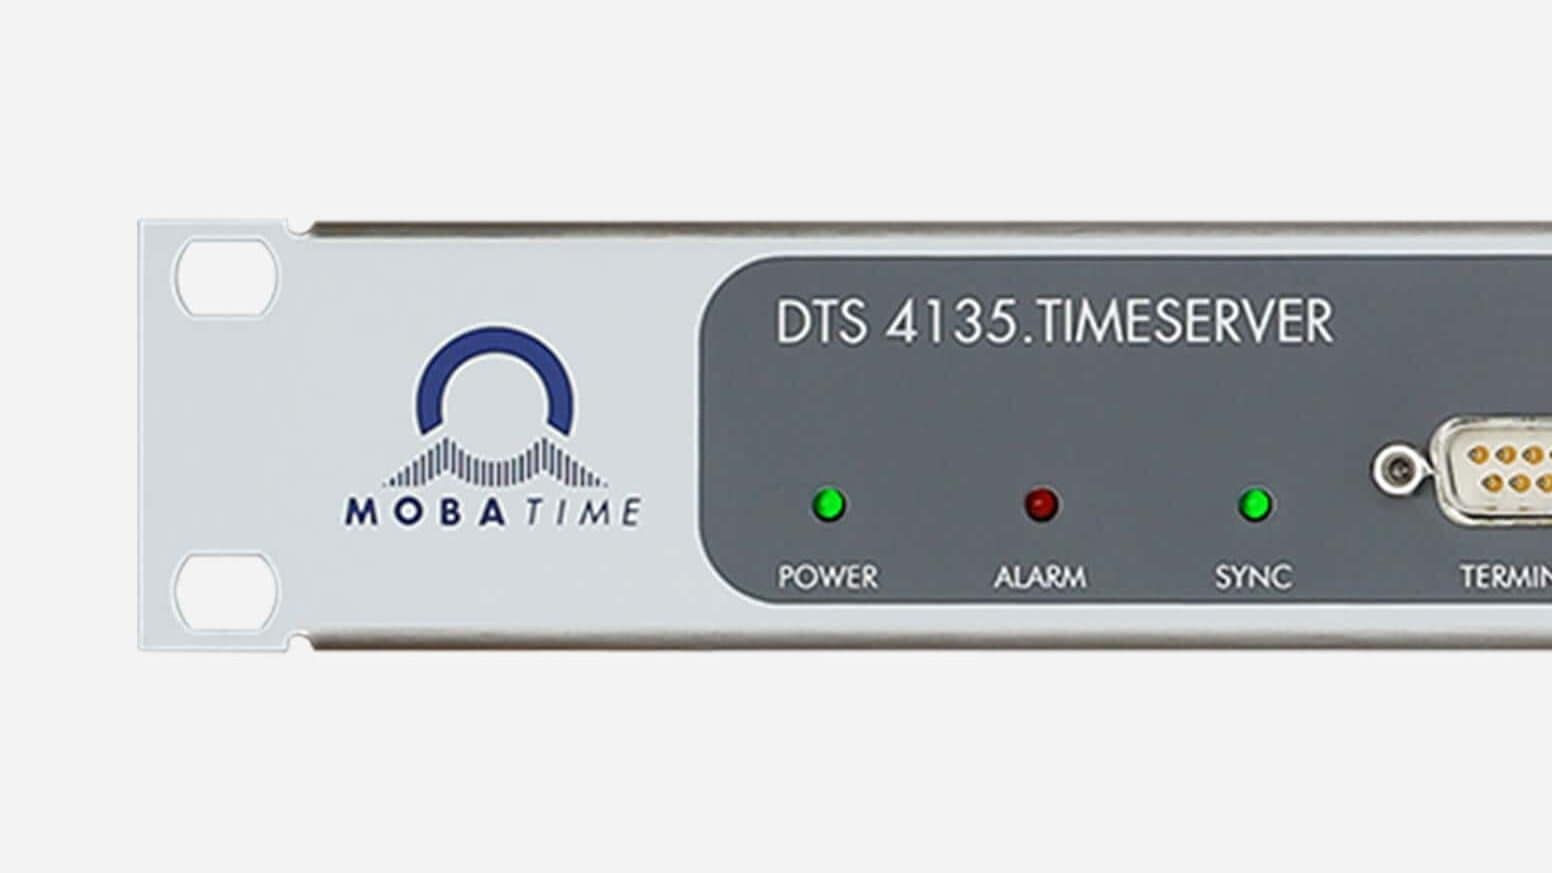 Mobatime DTS 4135.timeserver time server NTP front view DCF IRIG synchronization